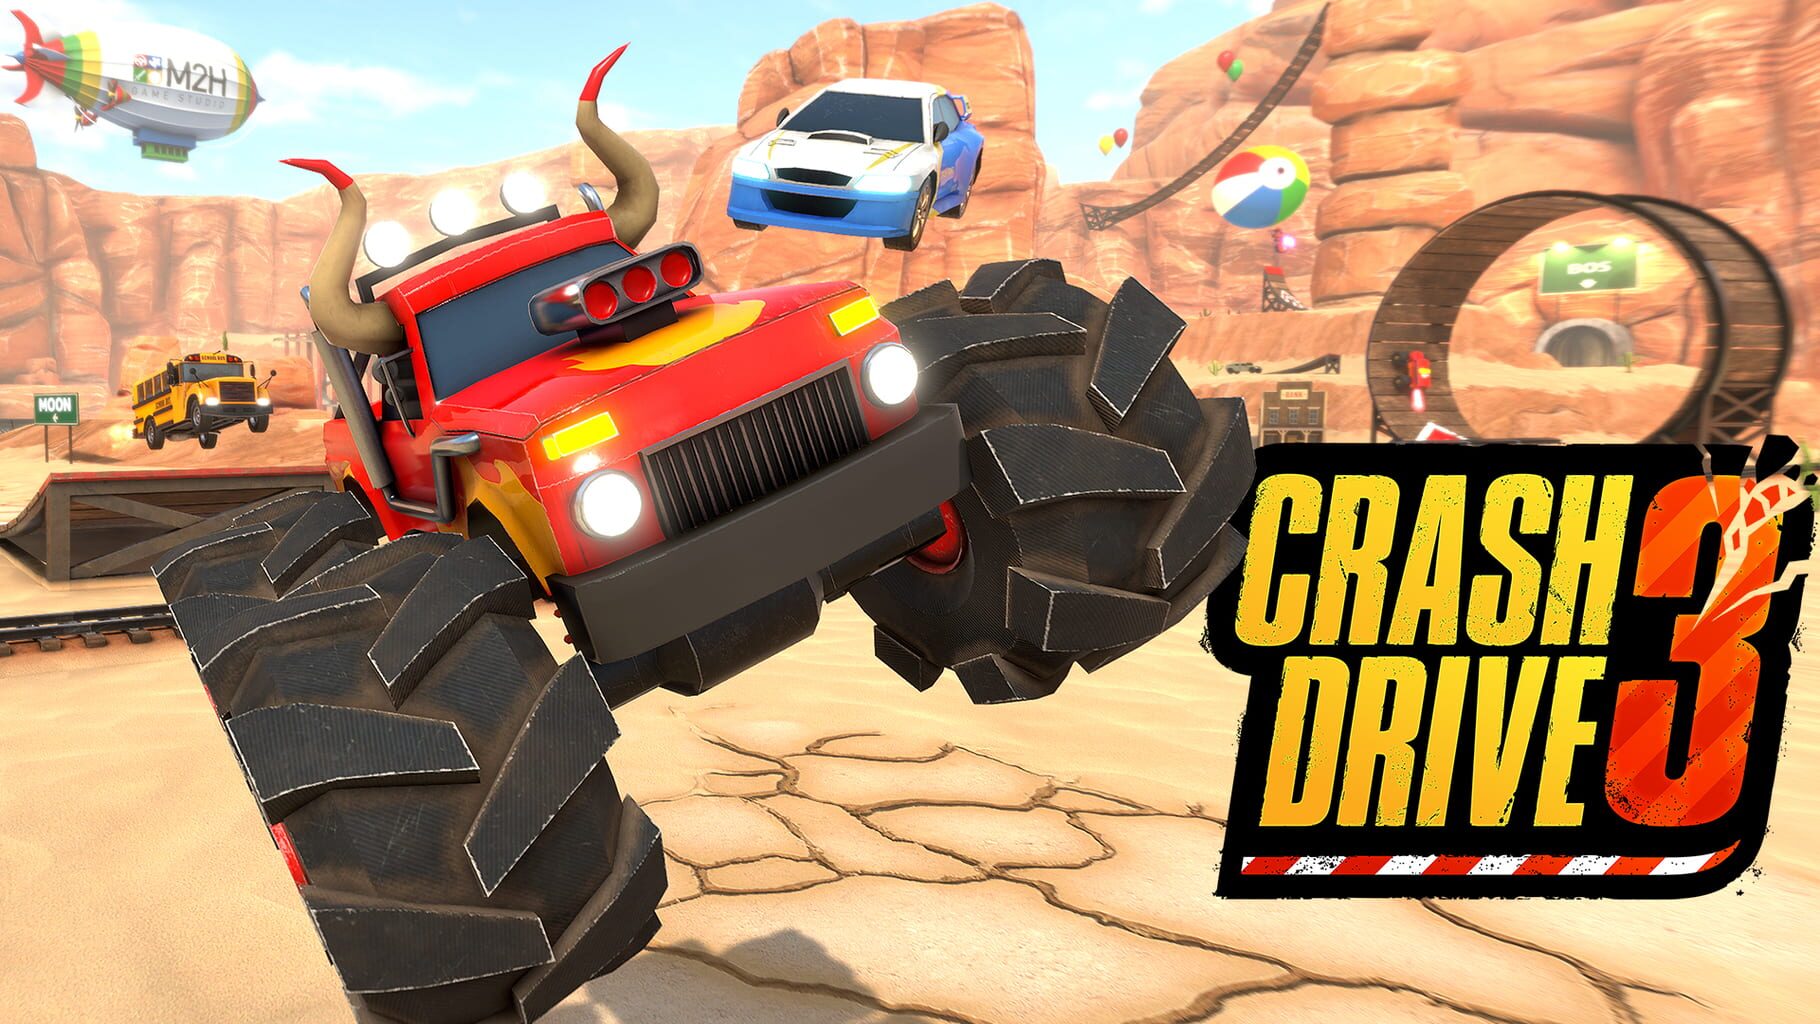 Crash Drive 3 artwork